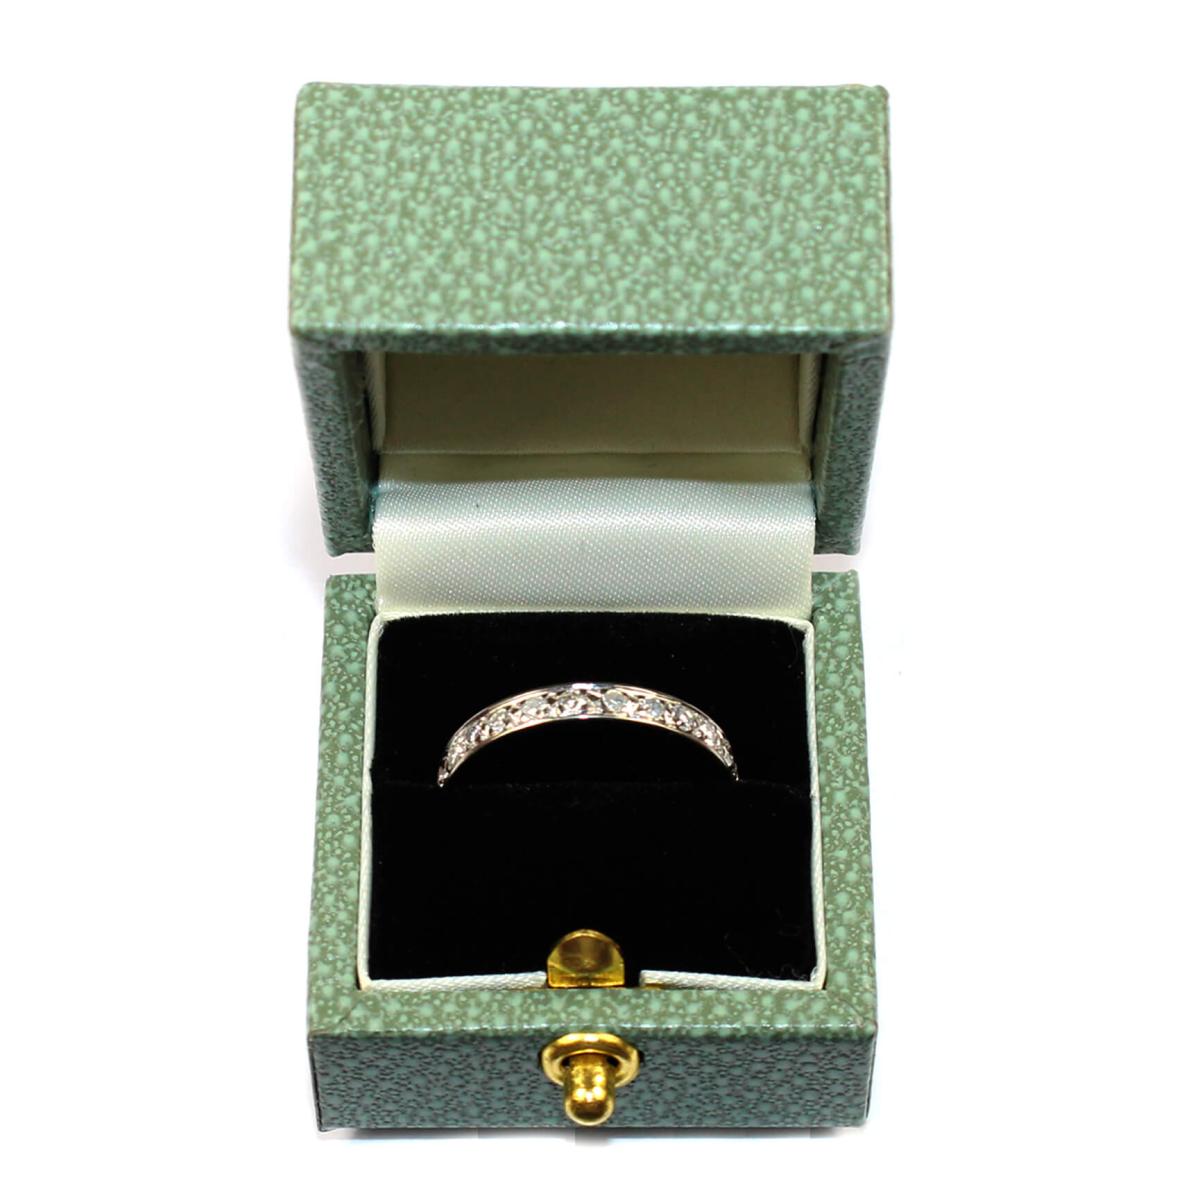 Art Deco Diamond Eternity Ring circa 1935